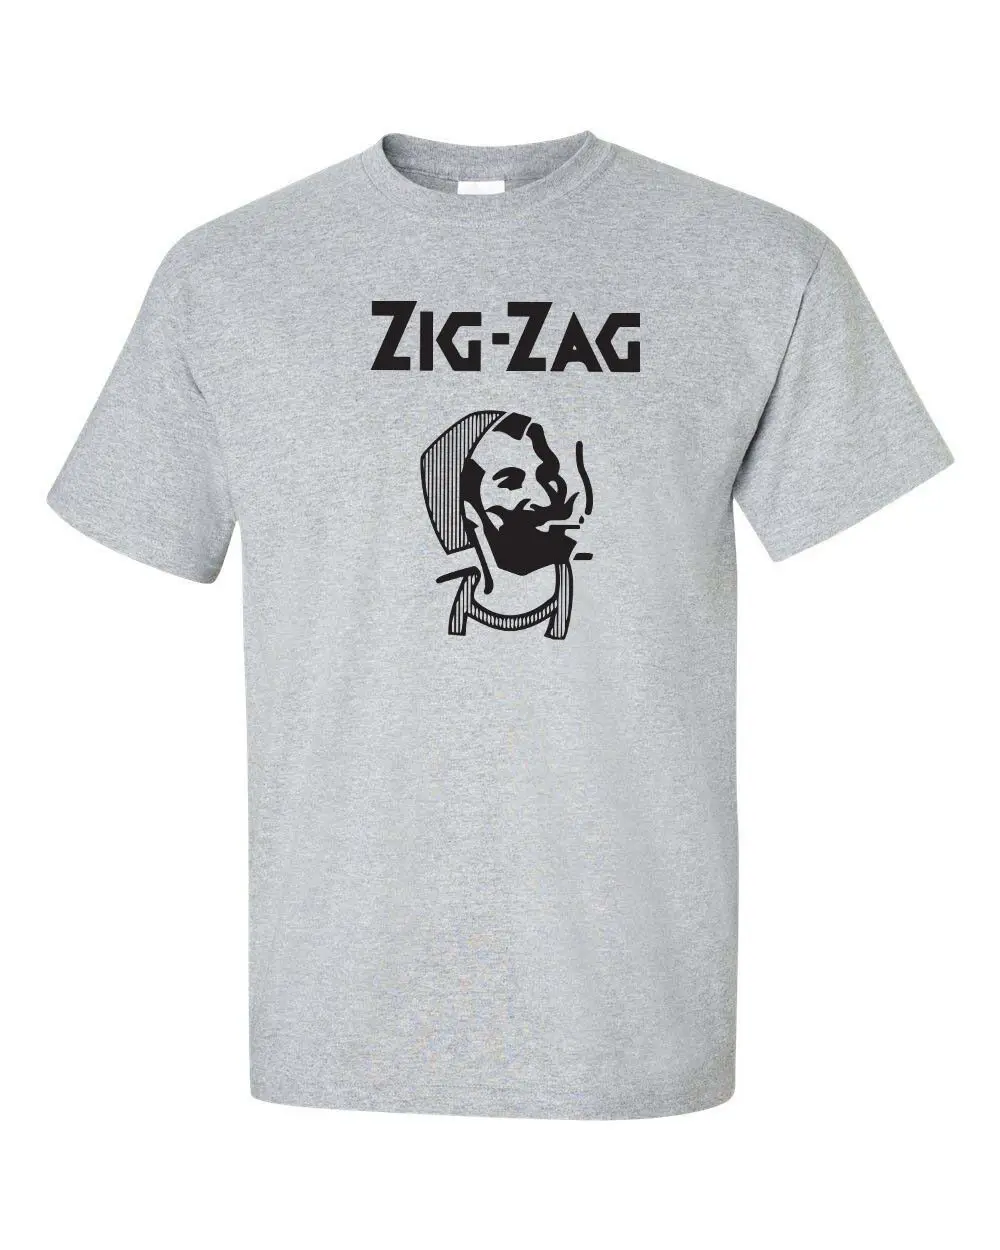 

Zig Zag Stoner Weed Paper Rolling Hippie College Party Funny Men's Tee Shirt 545